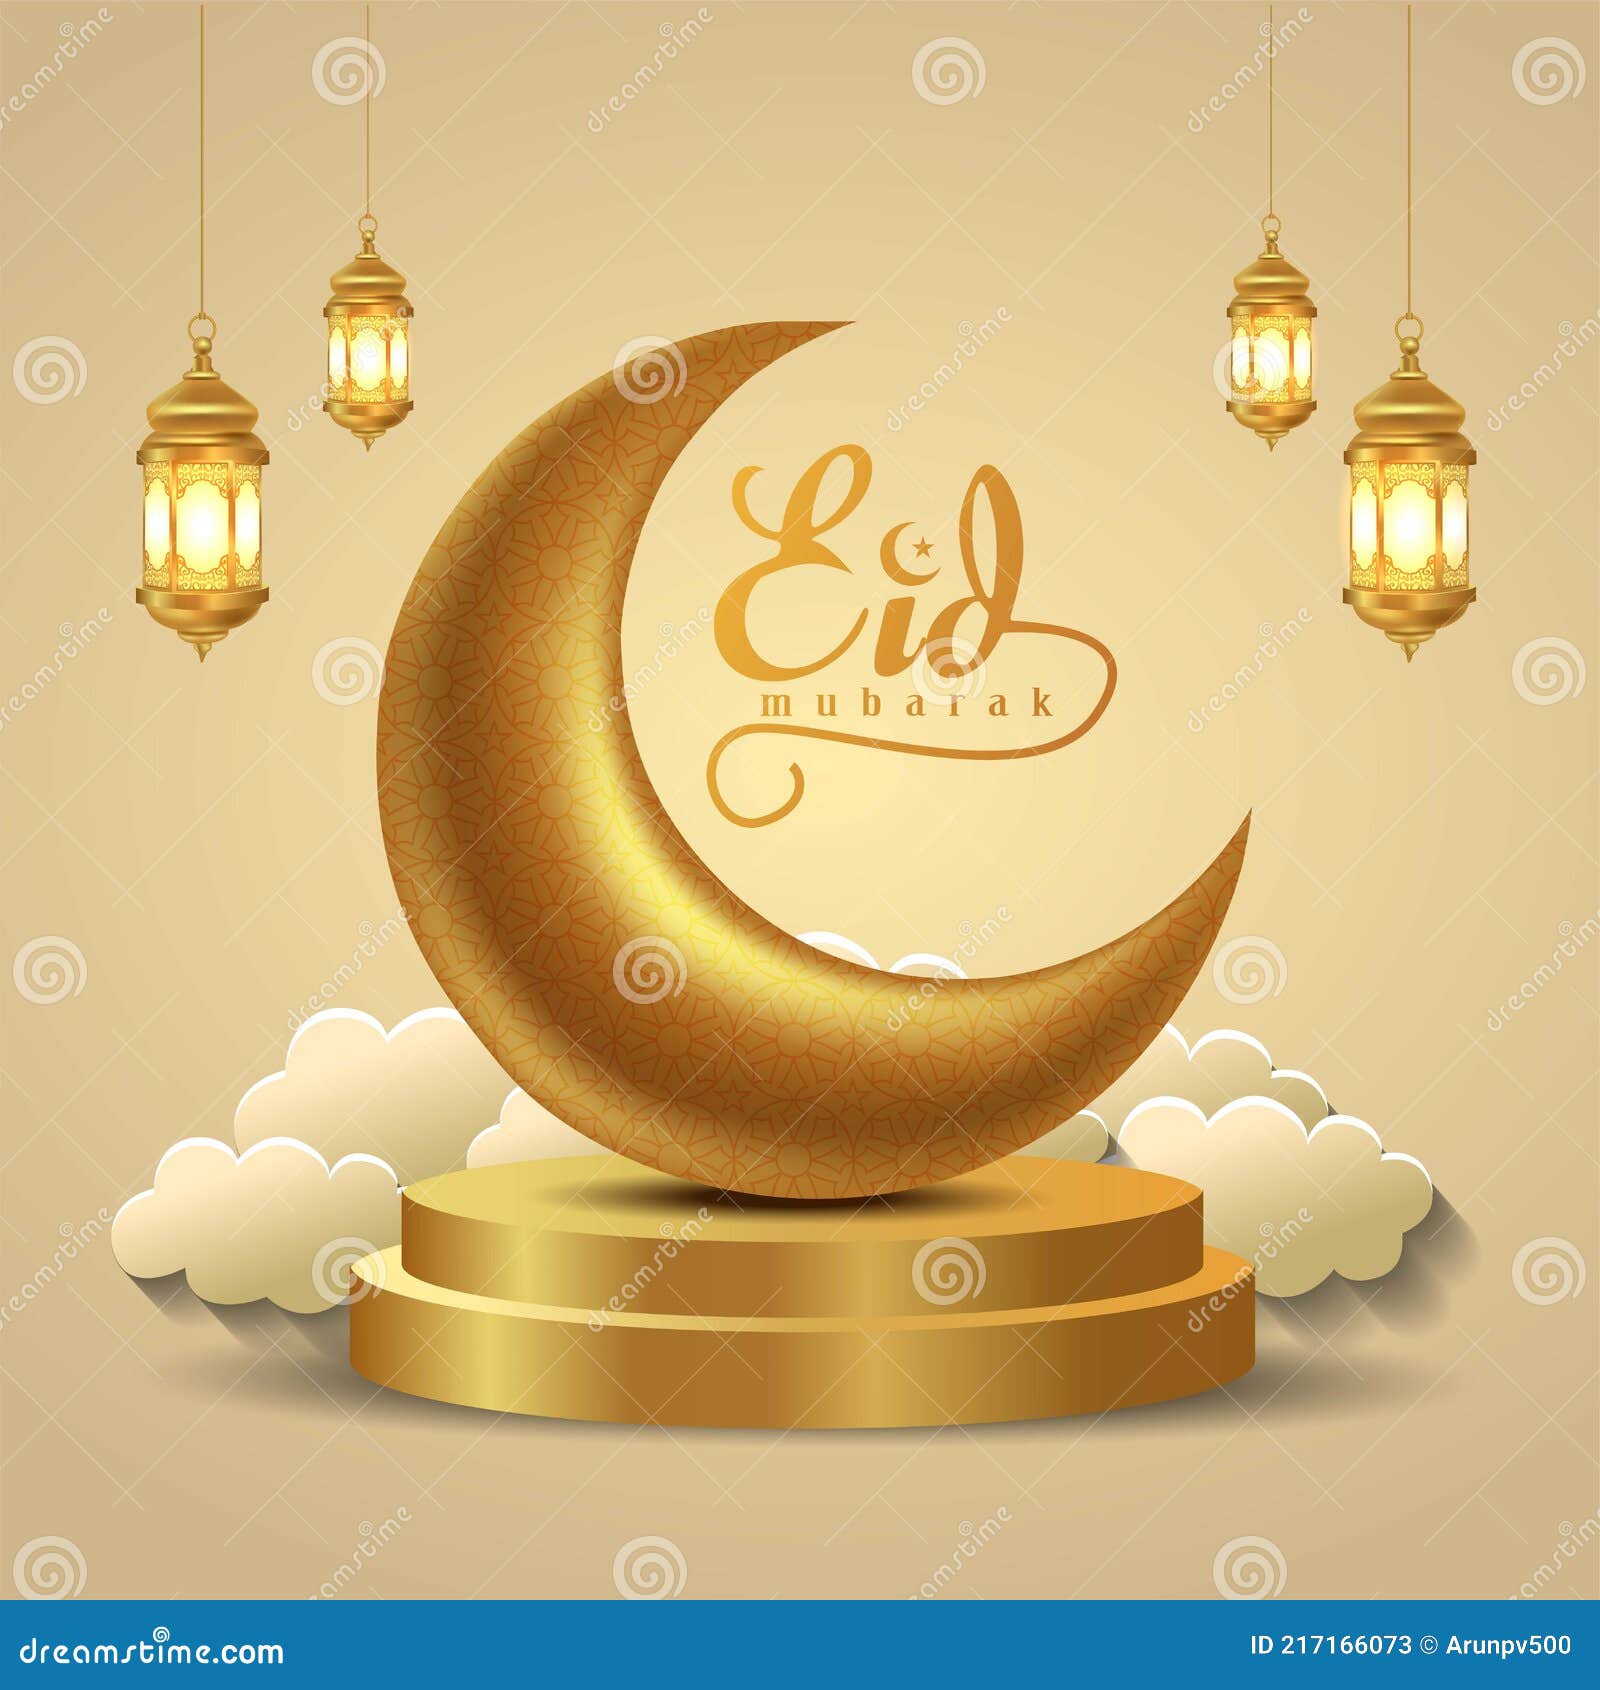 Decoration Ramadan Kareem and half-moon